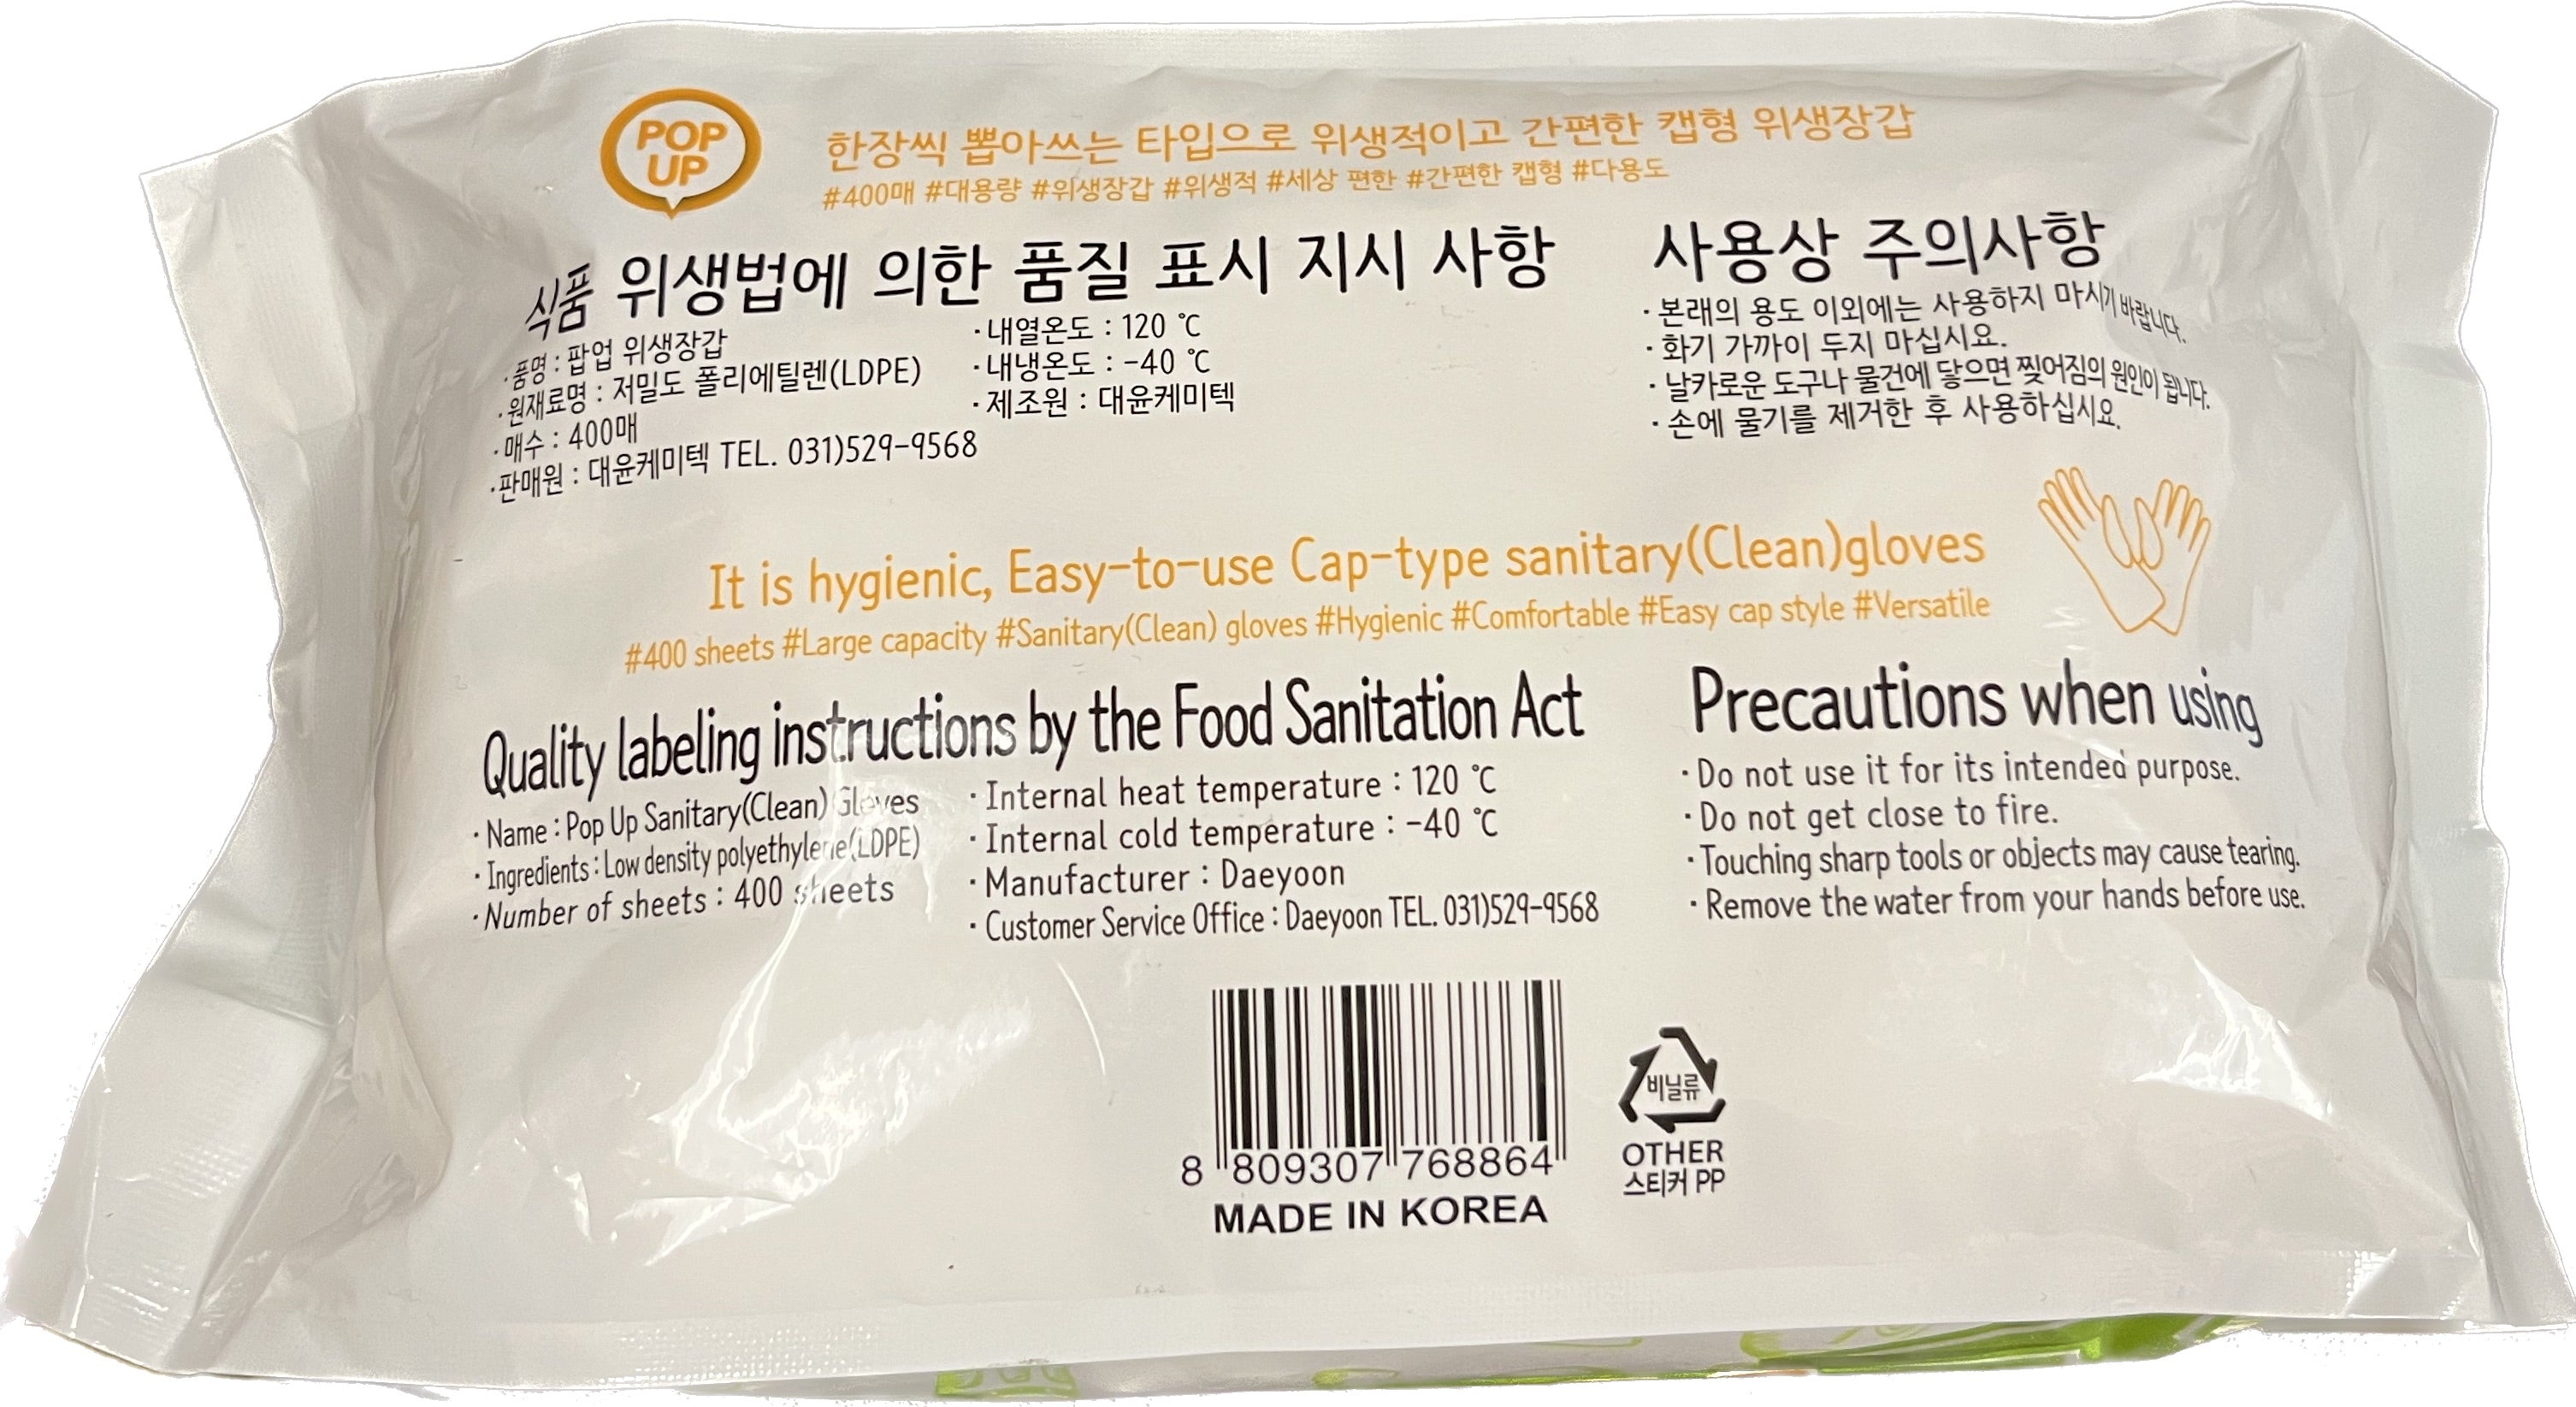 DaeYoon Chemytech Handiness Sanitary Gloves (400 sheets)